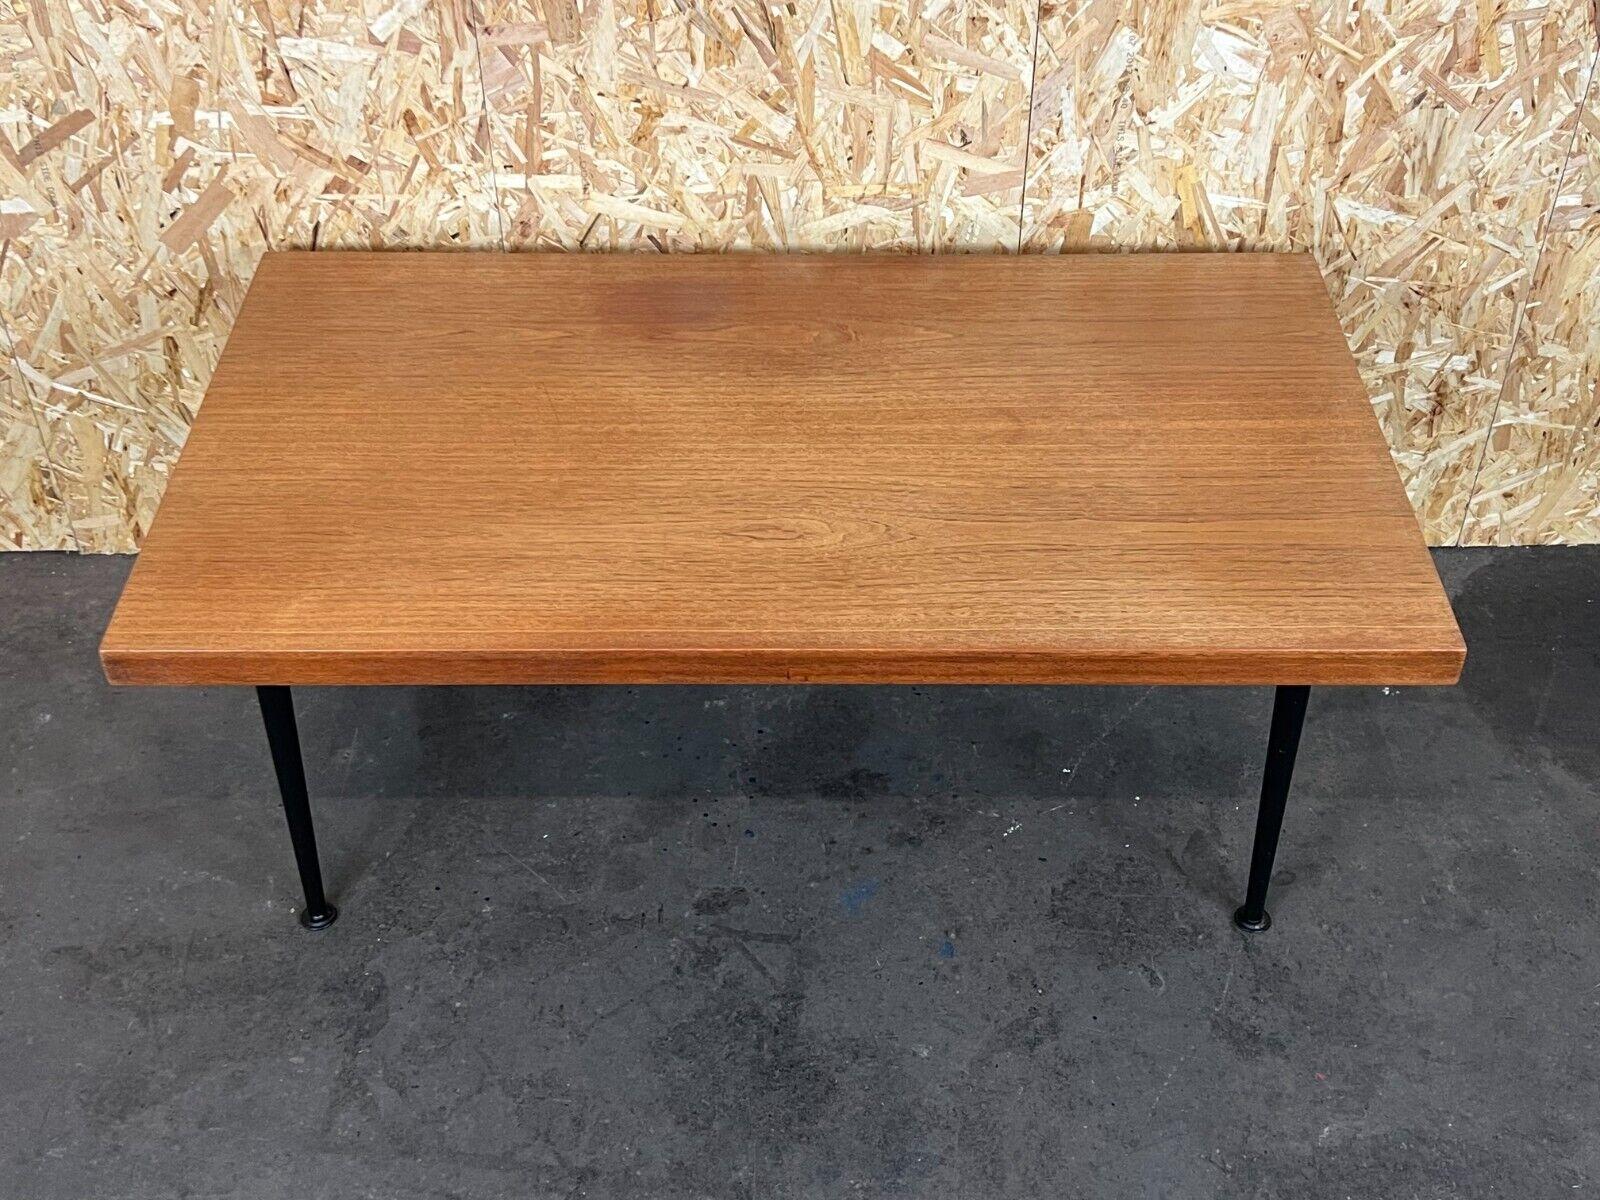 German 1960s-1970s Teak Coffee Table Side Table Ilse Möbel Danish Modern Design For Sale